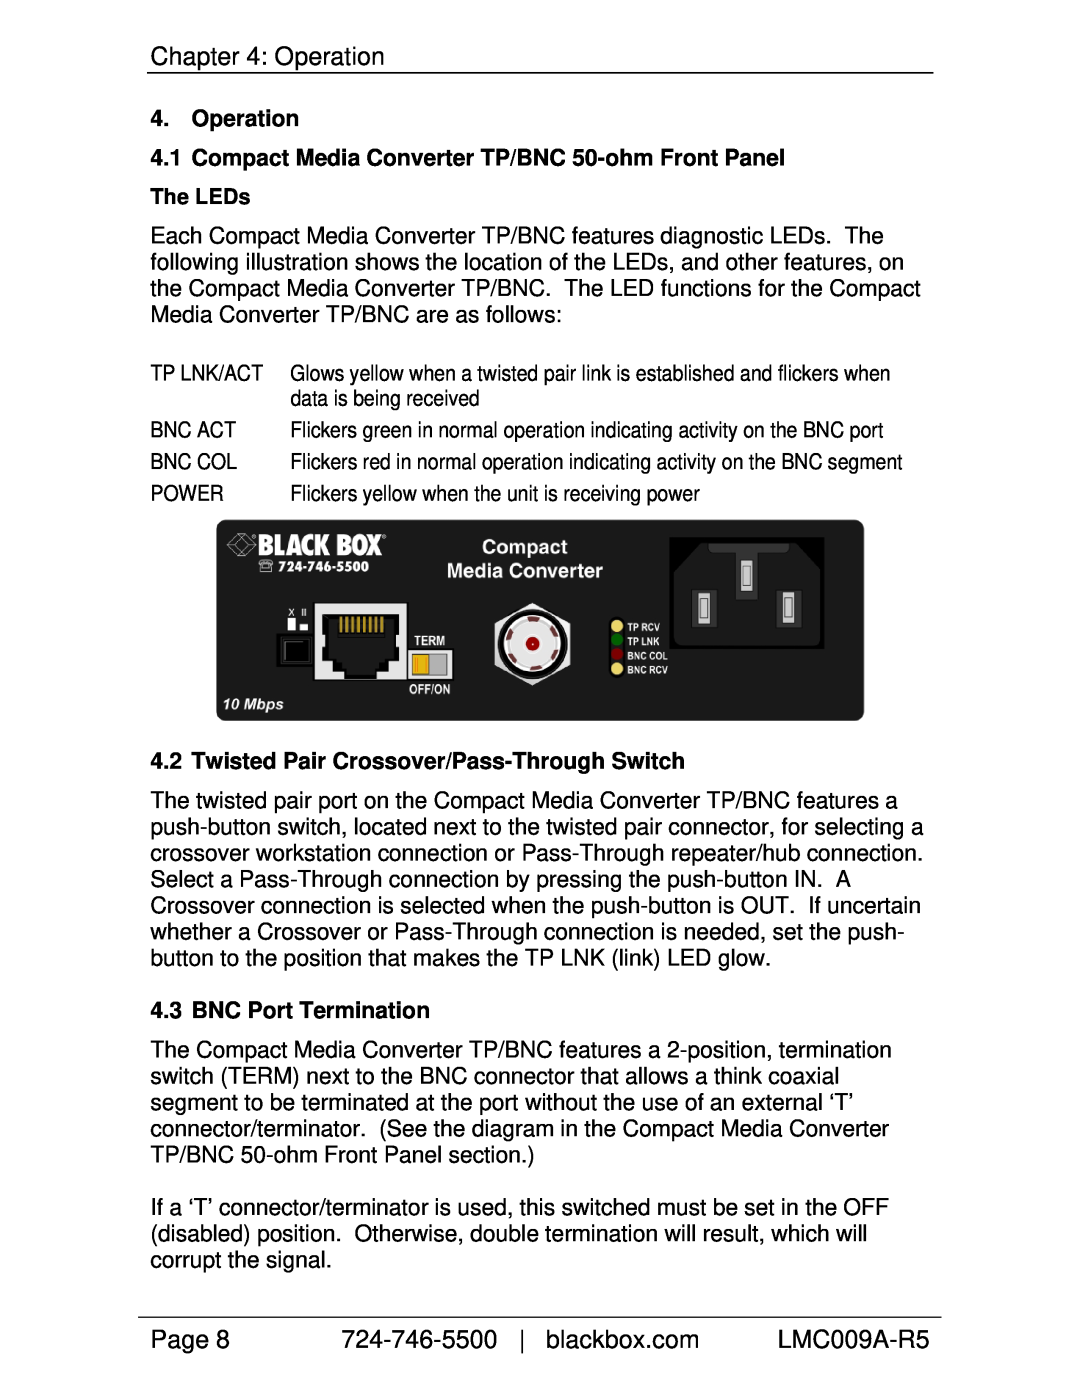 Black Box LMCD09A-FI5 Operation 4.1 Compact Media Converter TP/BNC 50-ohm Front Panel, BNC Port Termination, Page 